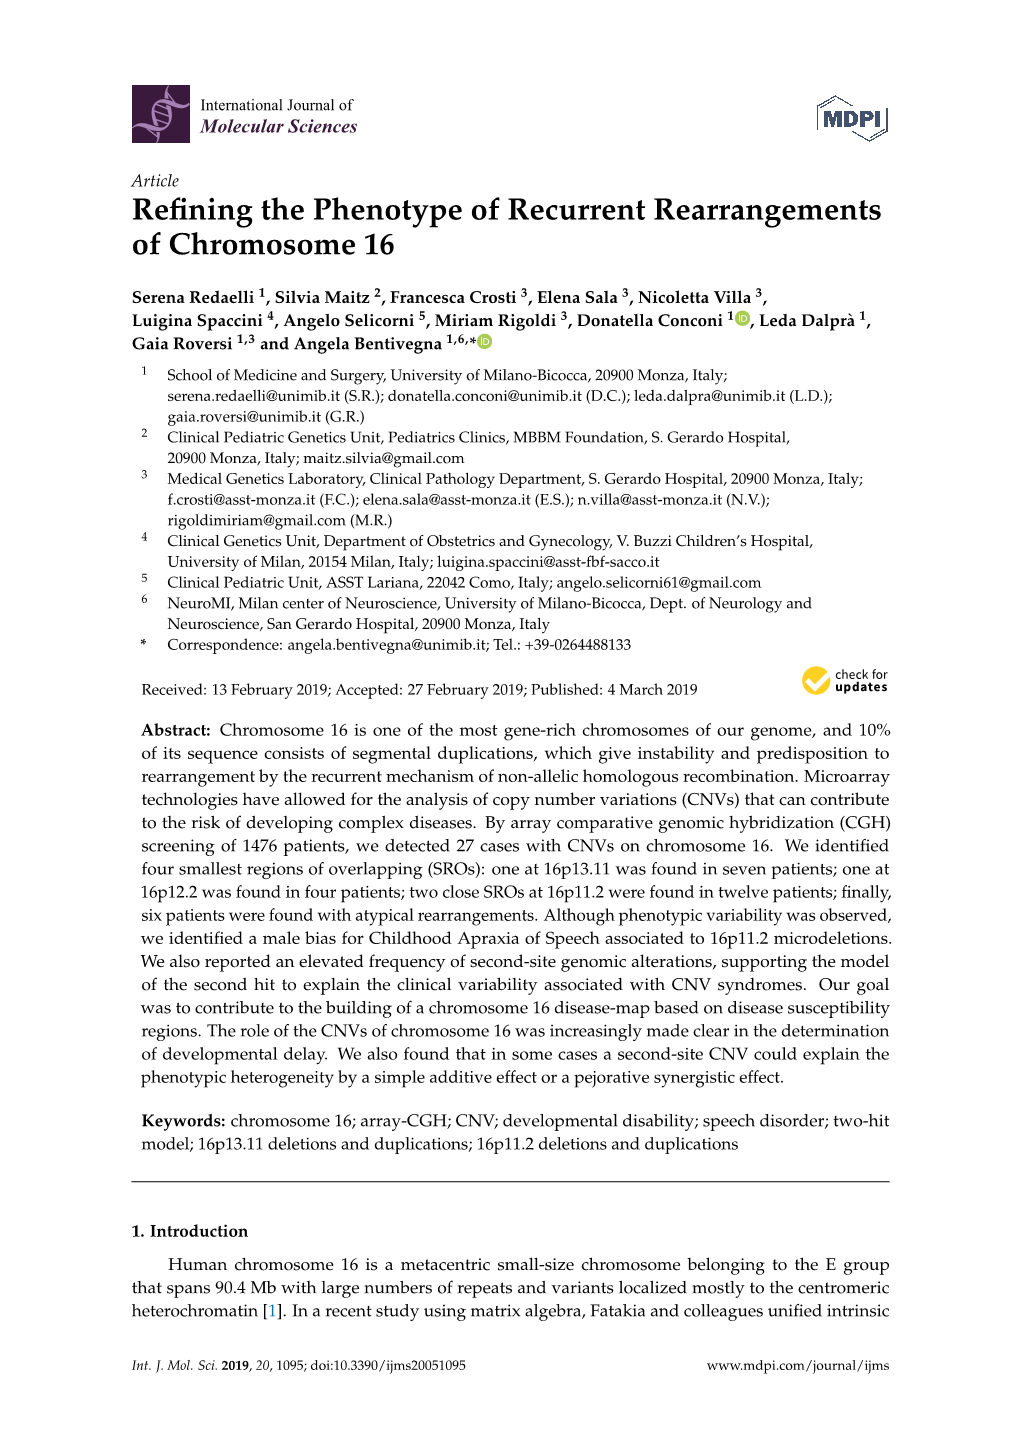 Refining the Phenotype of Recurrent Rearrangements of Chromosome 16